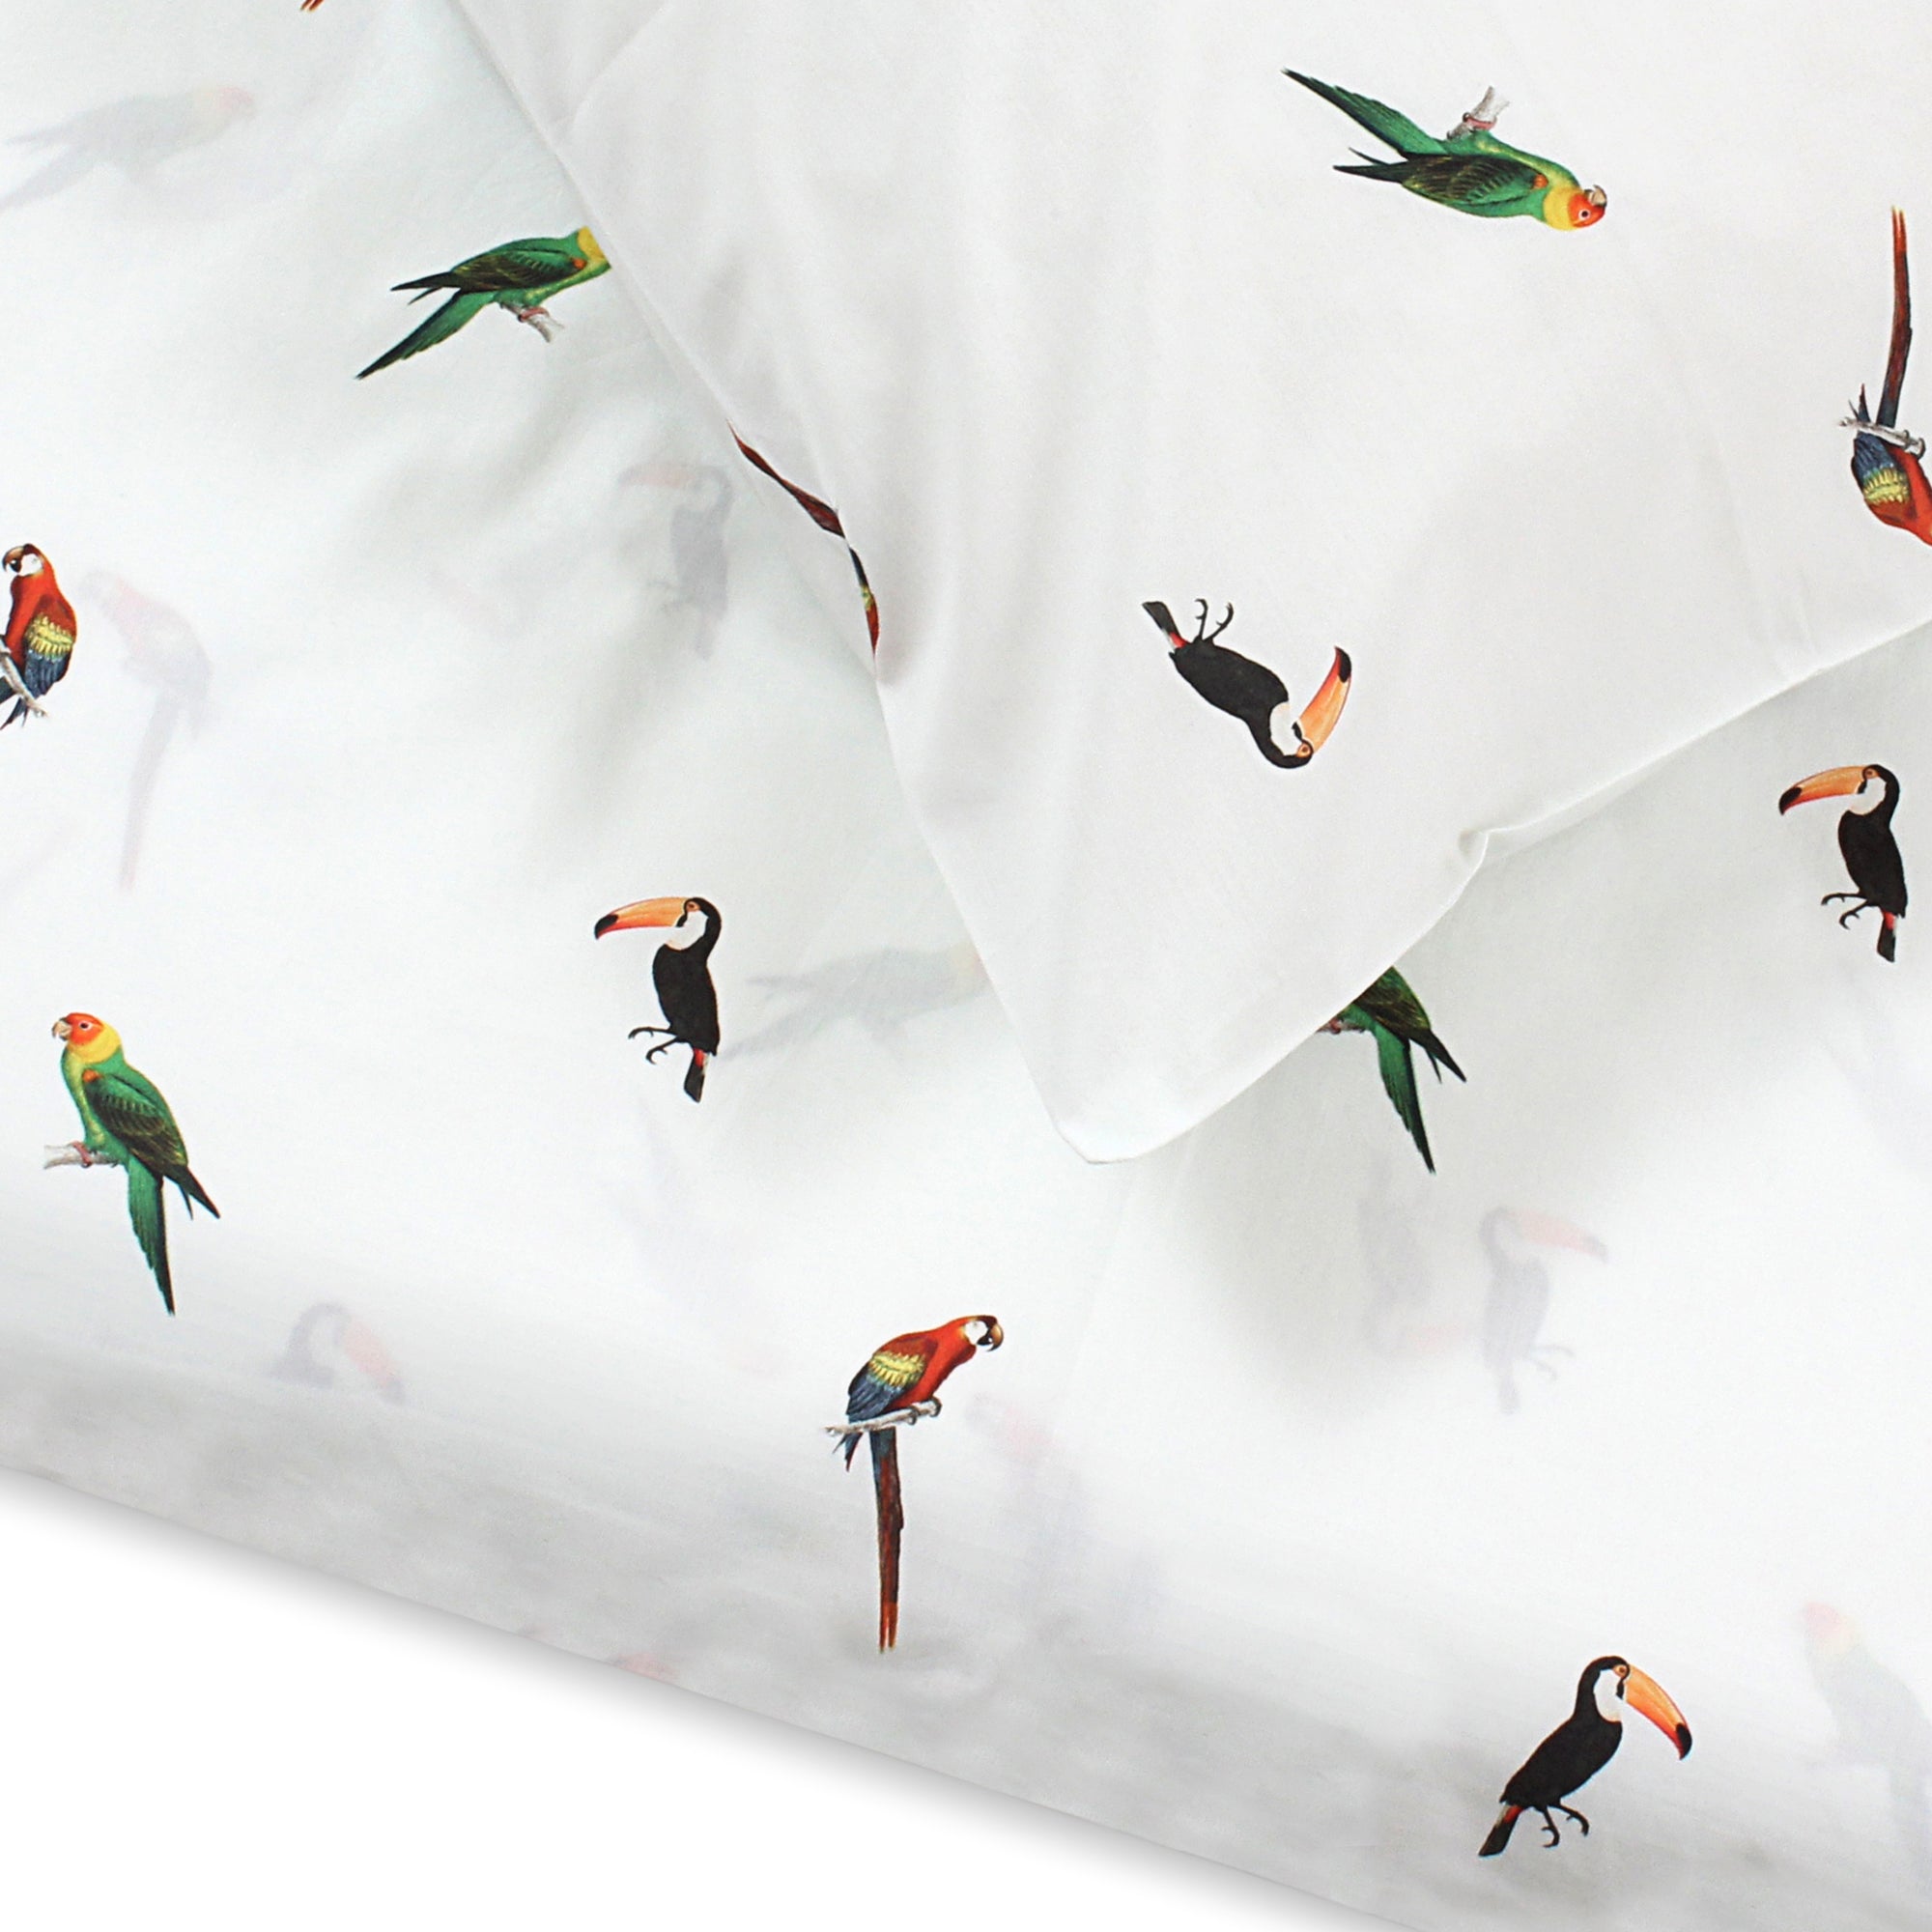 Parrots Printed Duvet + Pillowcases